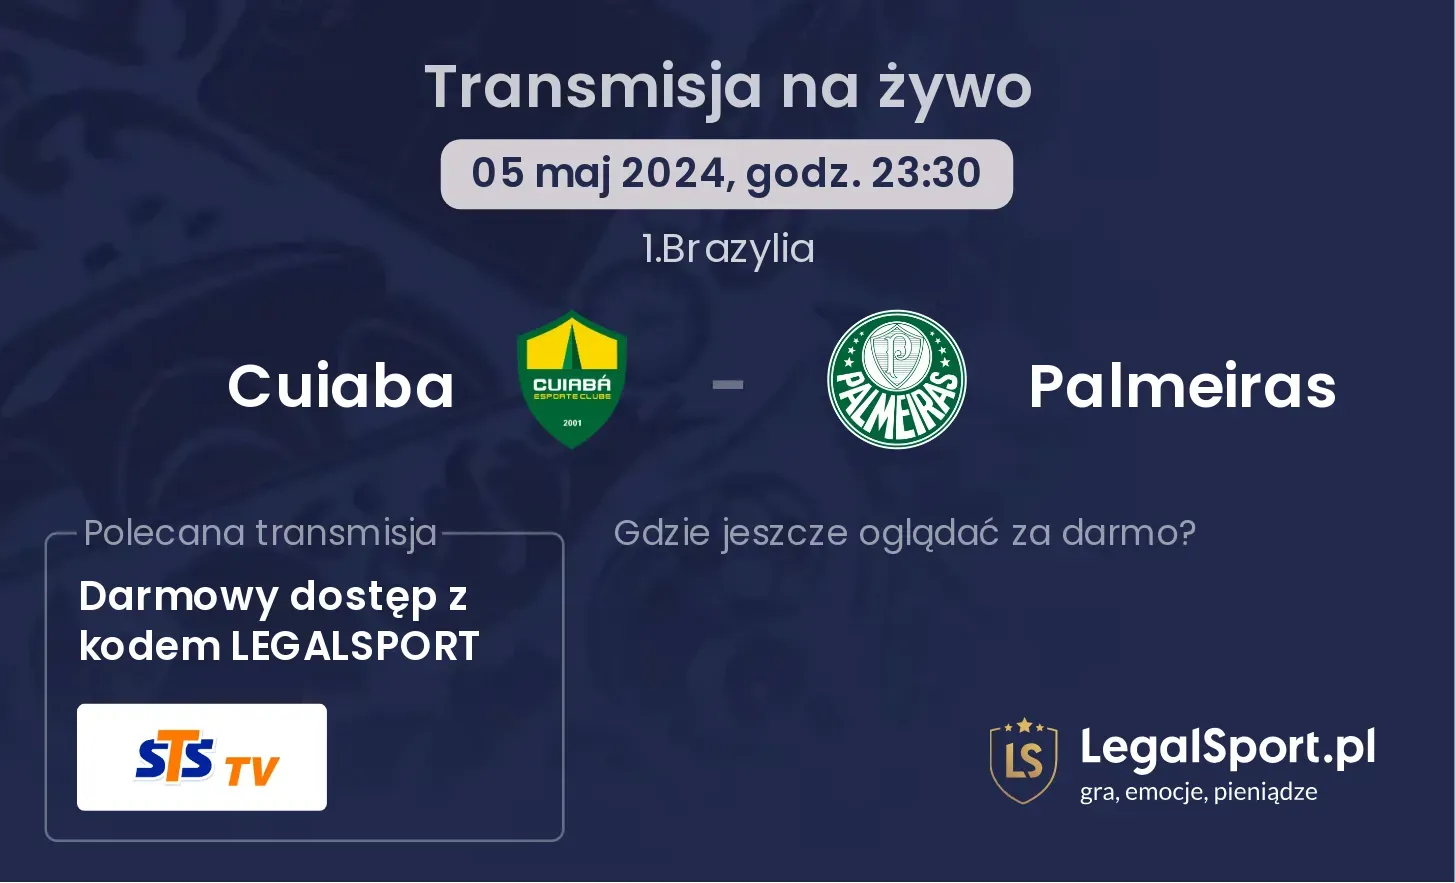 Cuiaba - Palmeiras transmisja na żywo